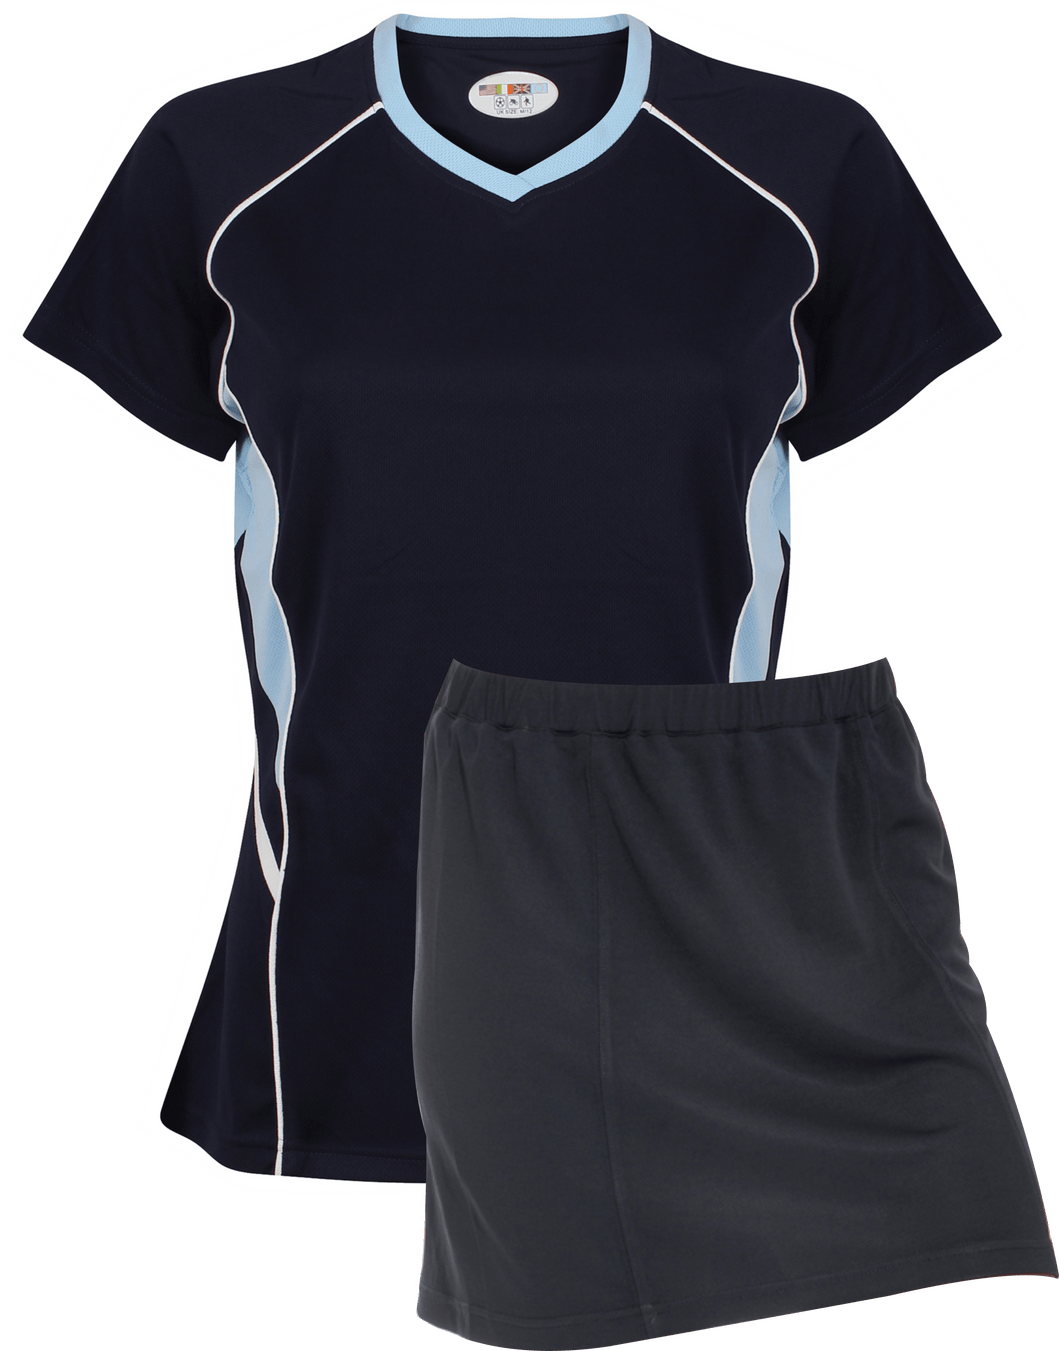 Ladies Netball / Hockey / Rounders V Neck Team Kits Gazelle Sports UK XS/8 Navy/Pale Blue/White YES